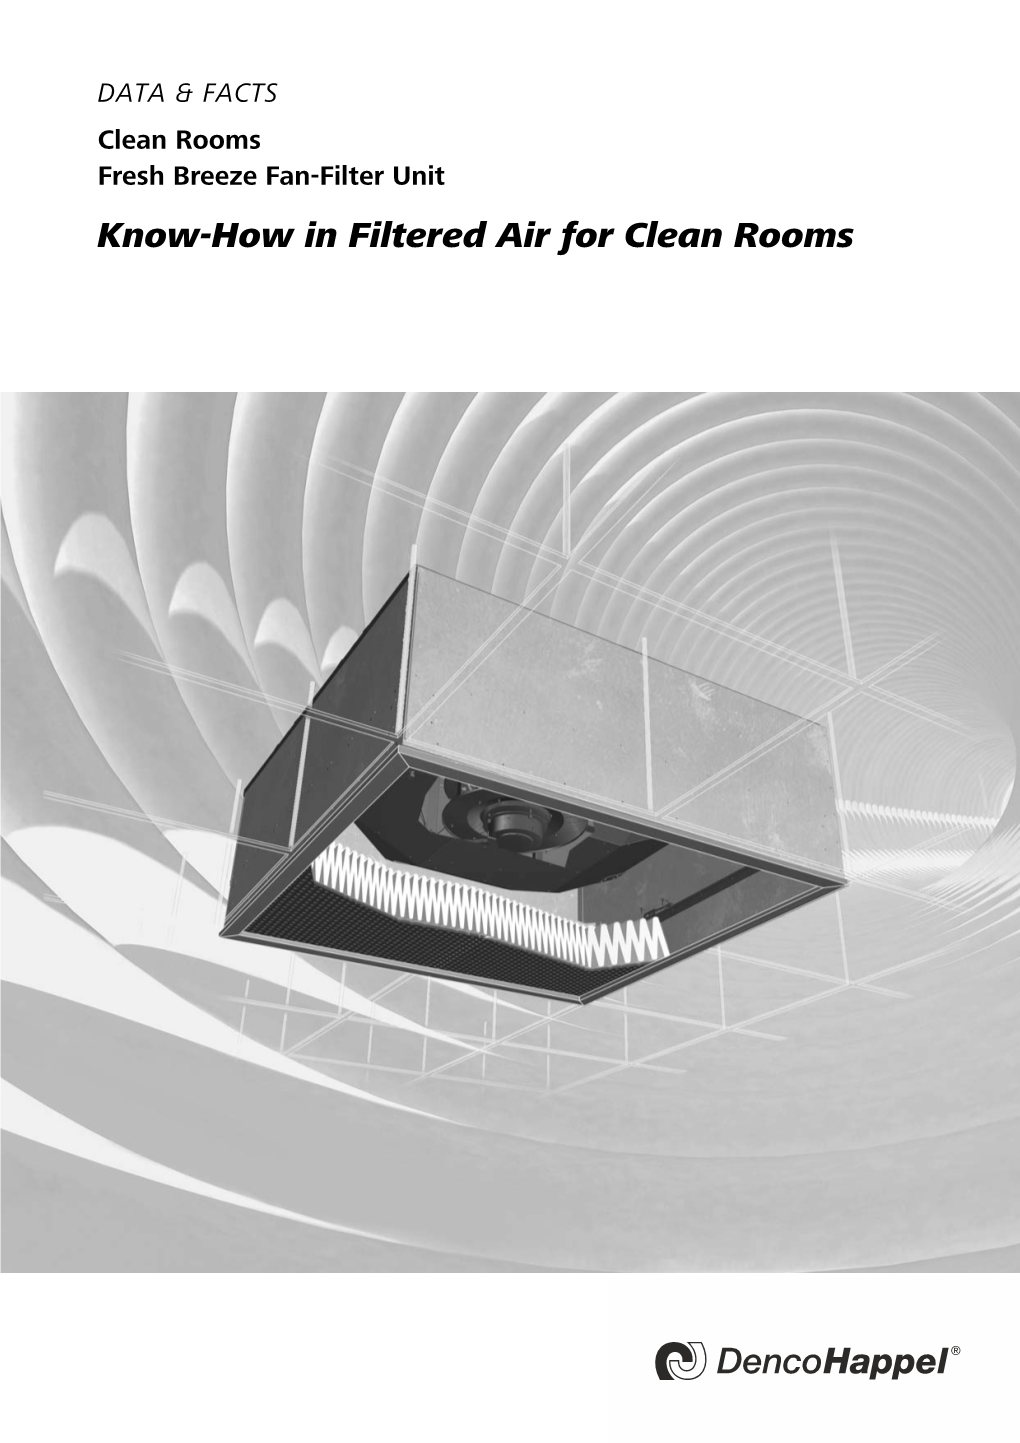 DATA & FACTS Clean Rooms Fresh Breeze Fan-Filter Unit